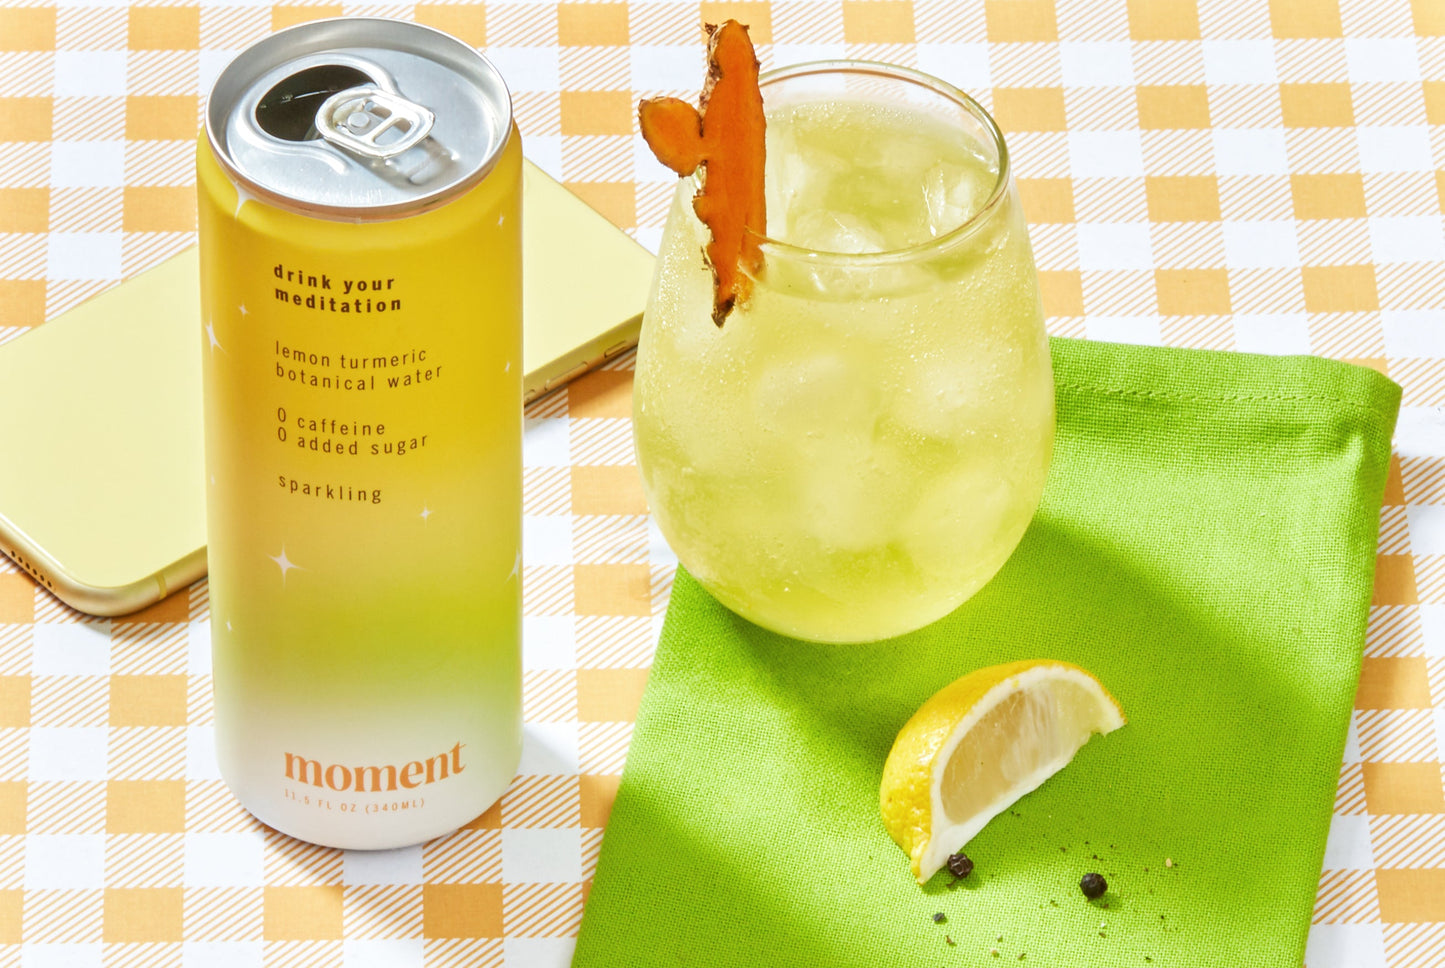 Lemon Turmeric Adaptogen Drink (12-pack) by Moment | Drink Your Meditation